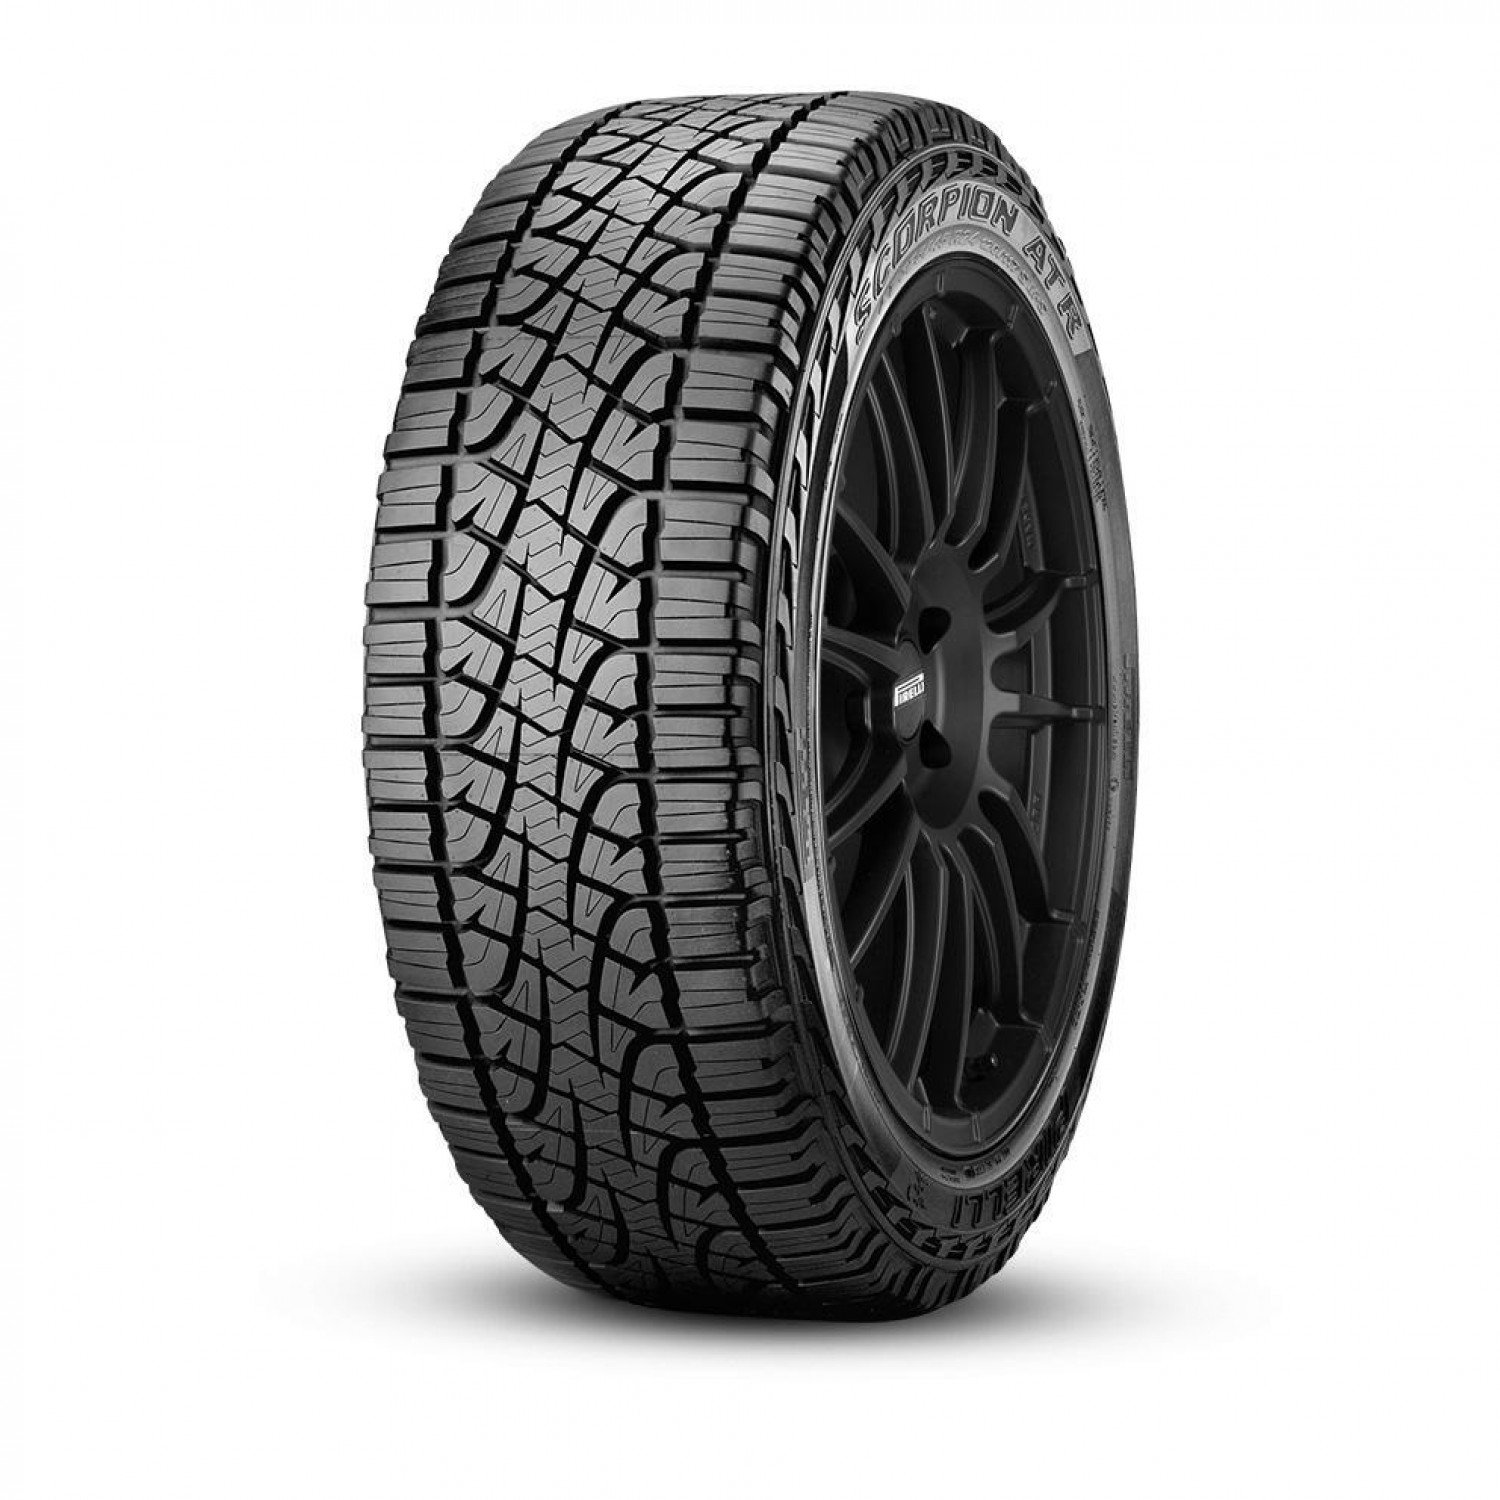 Pirelli Scorpion All Terrain Reversable 110T) White Letters/Black Outlined Plus (245/70R17 Tire Sidewall vzn121972